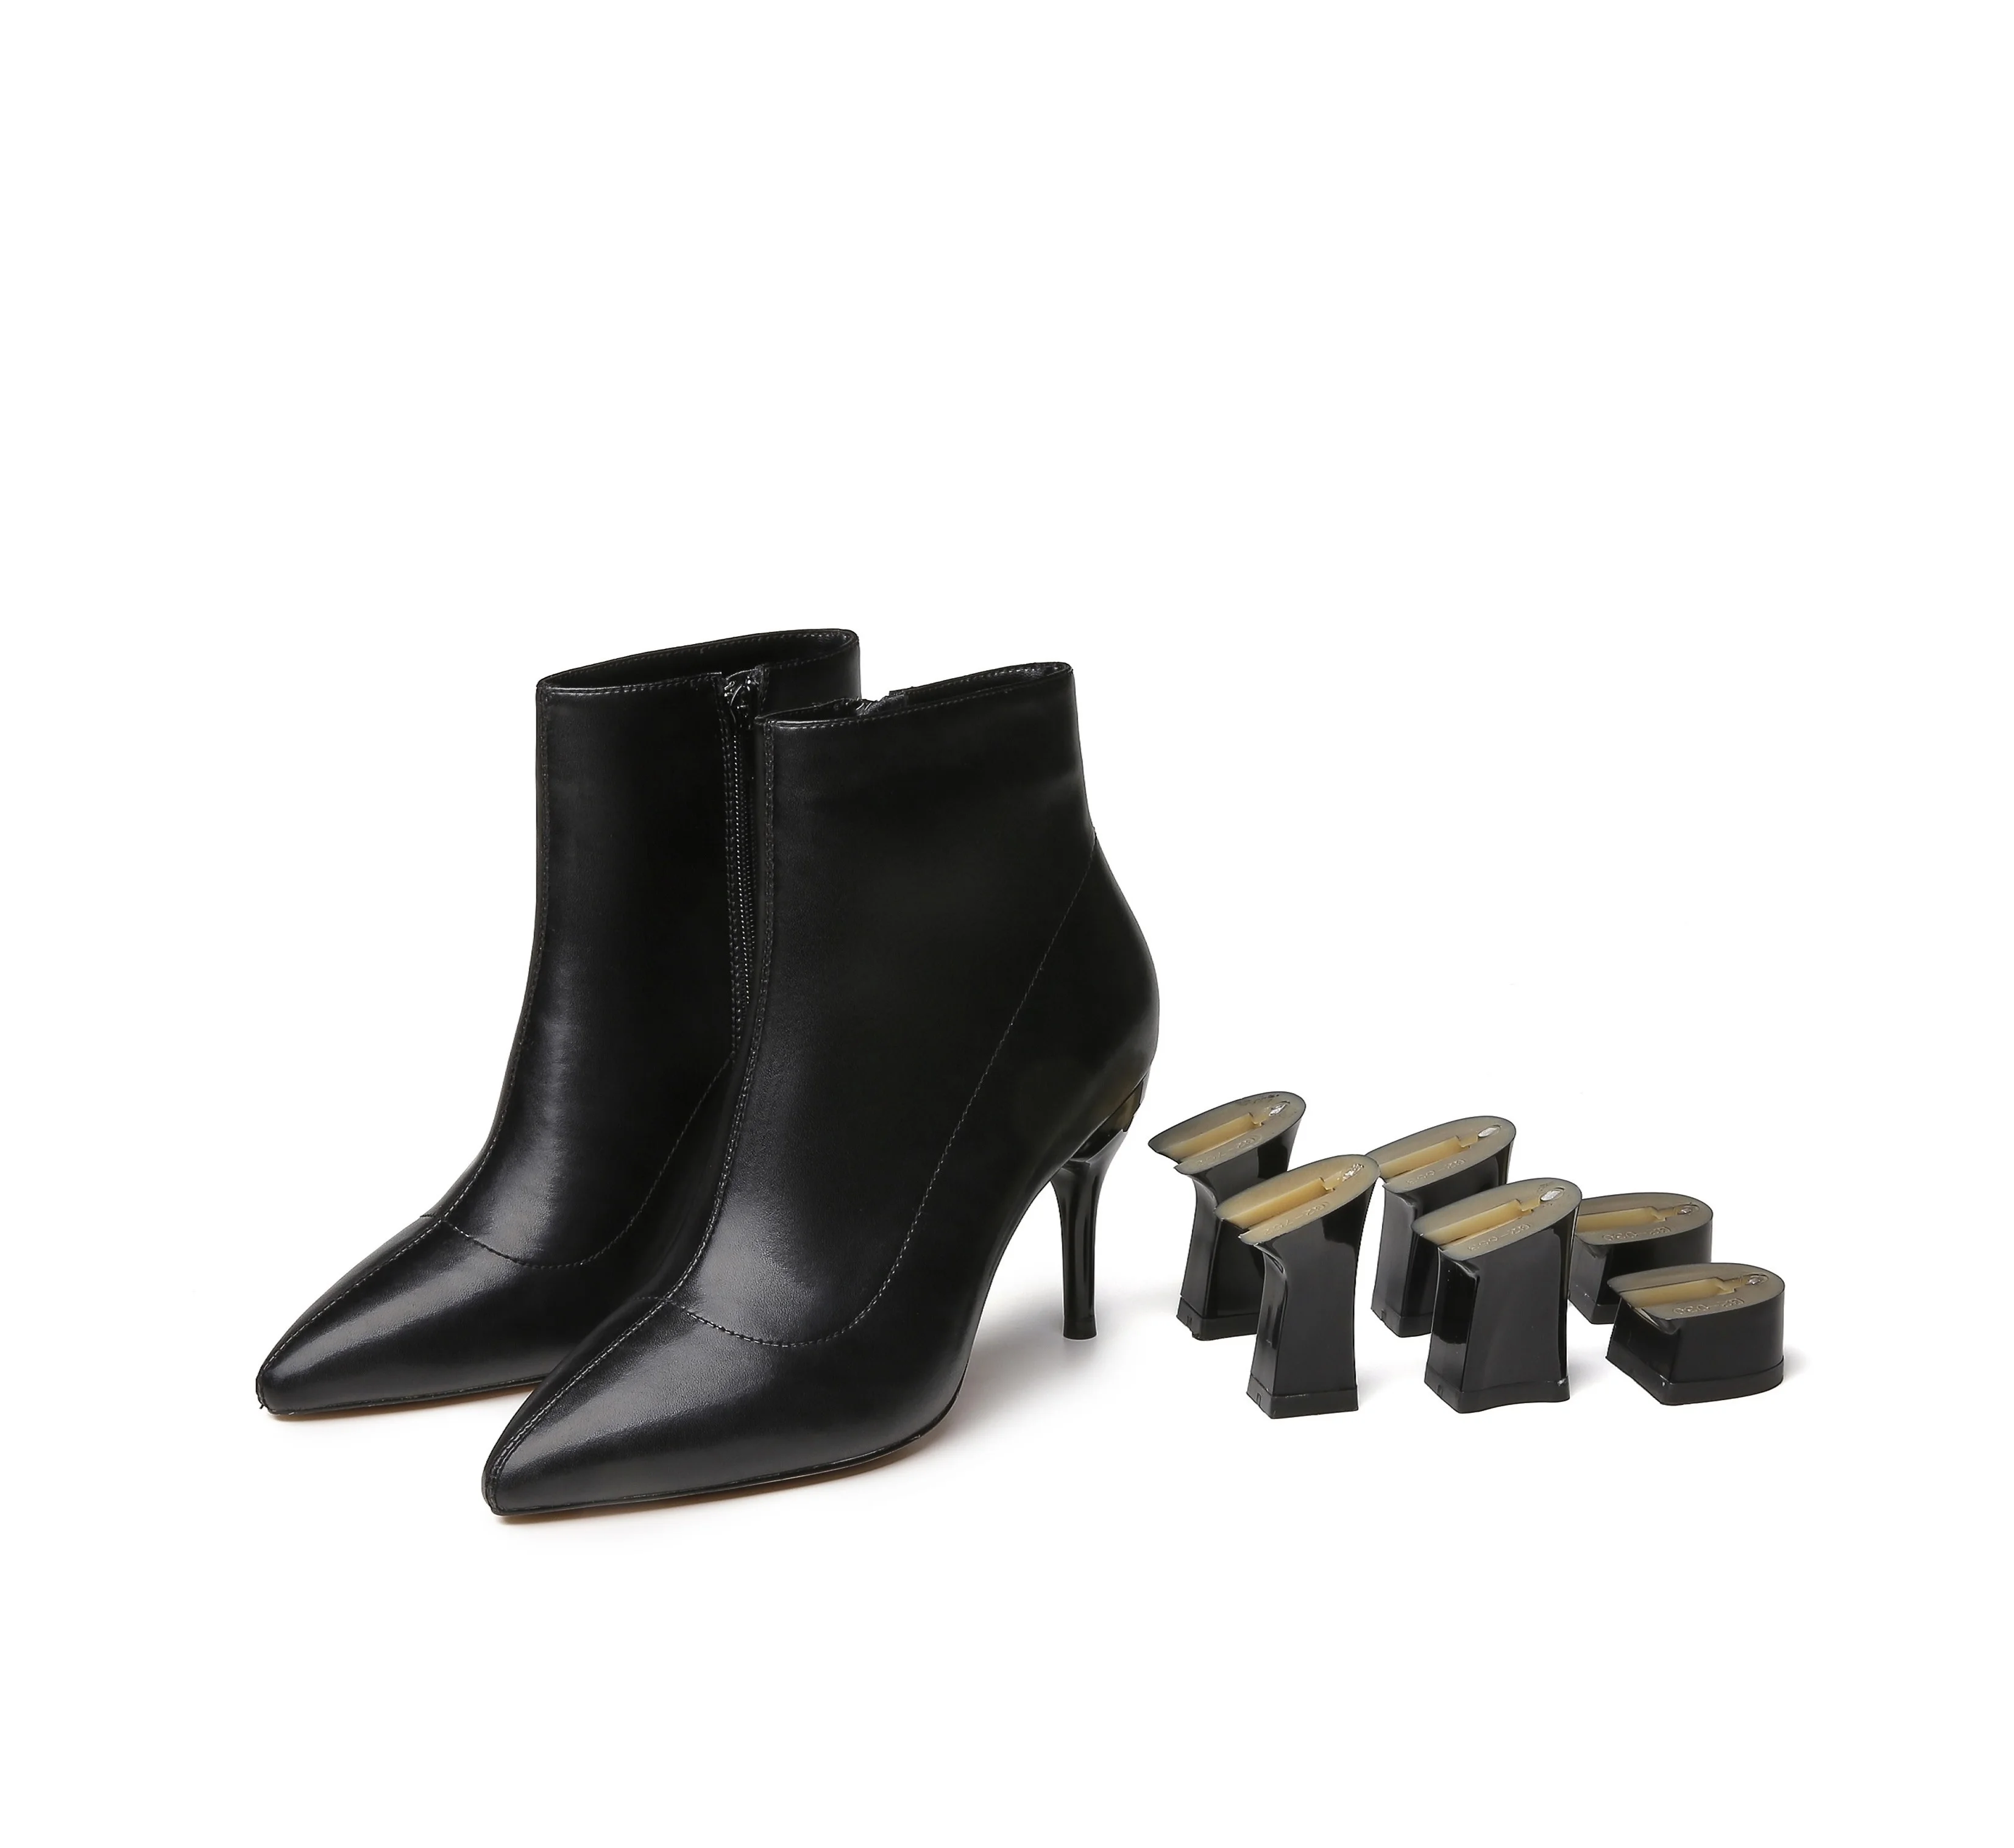 Ladies hot spot sales 65mm-85mm replaceable shoes change heels boots 35-39 size black boots change boots